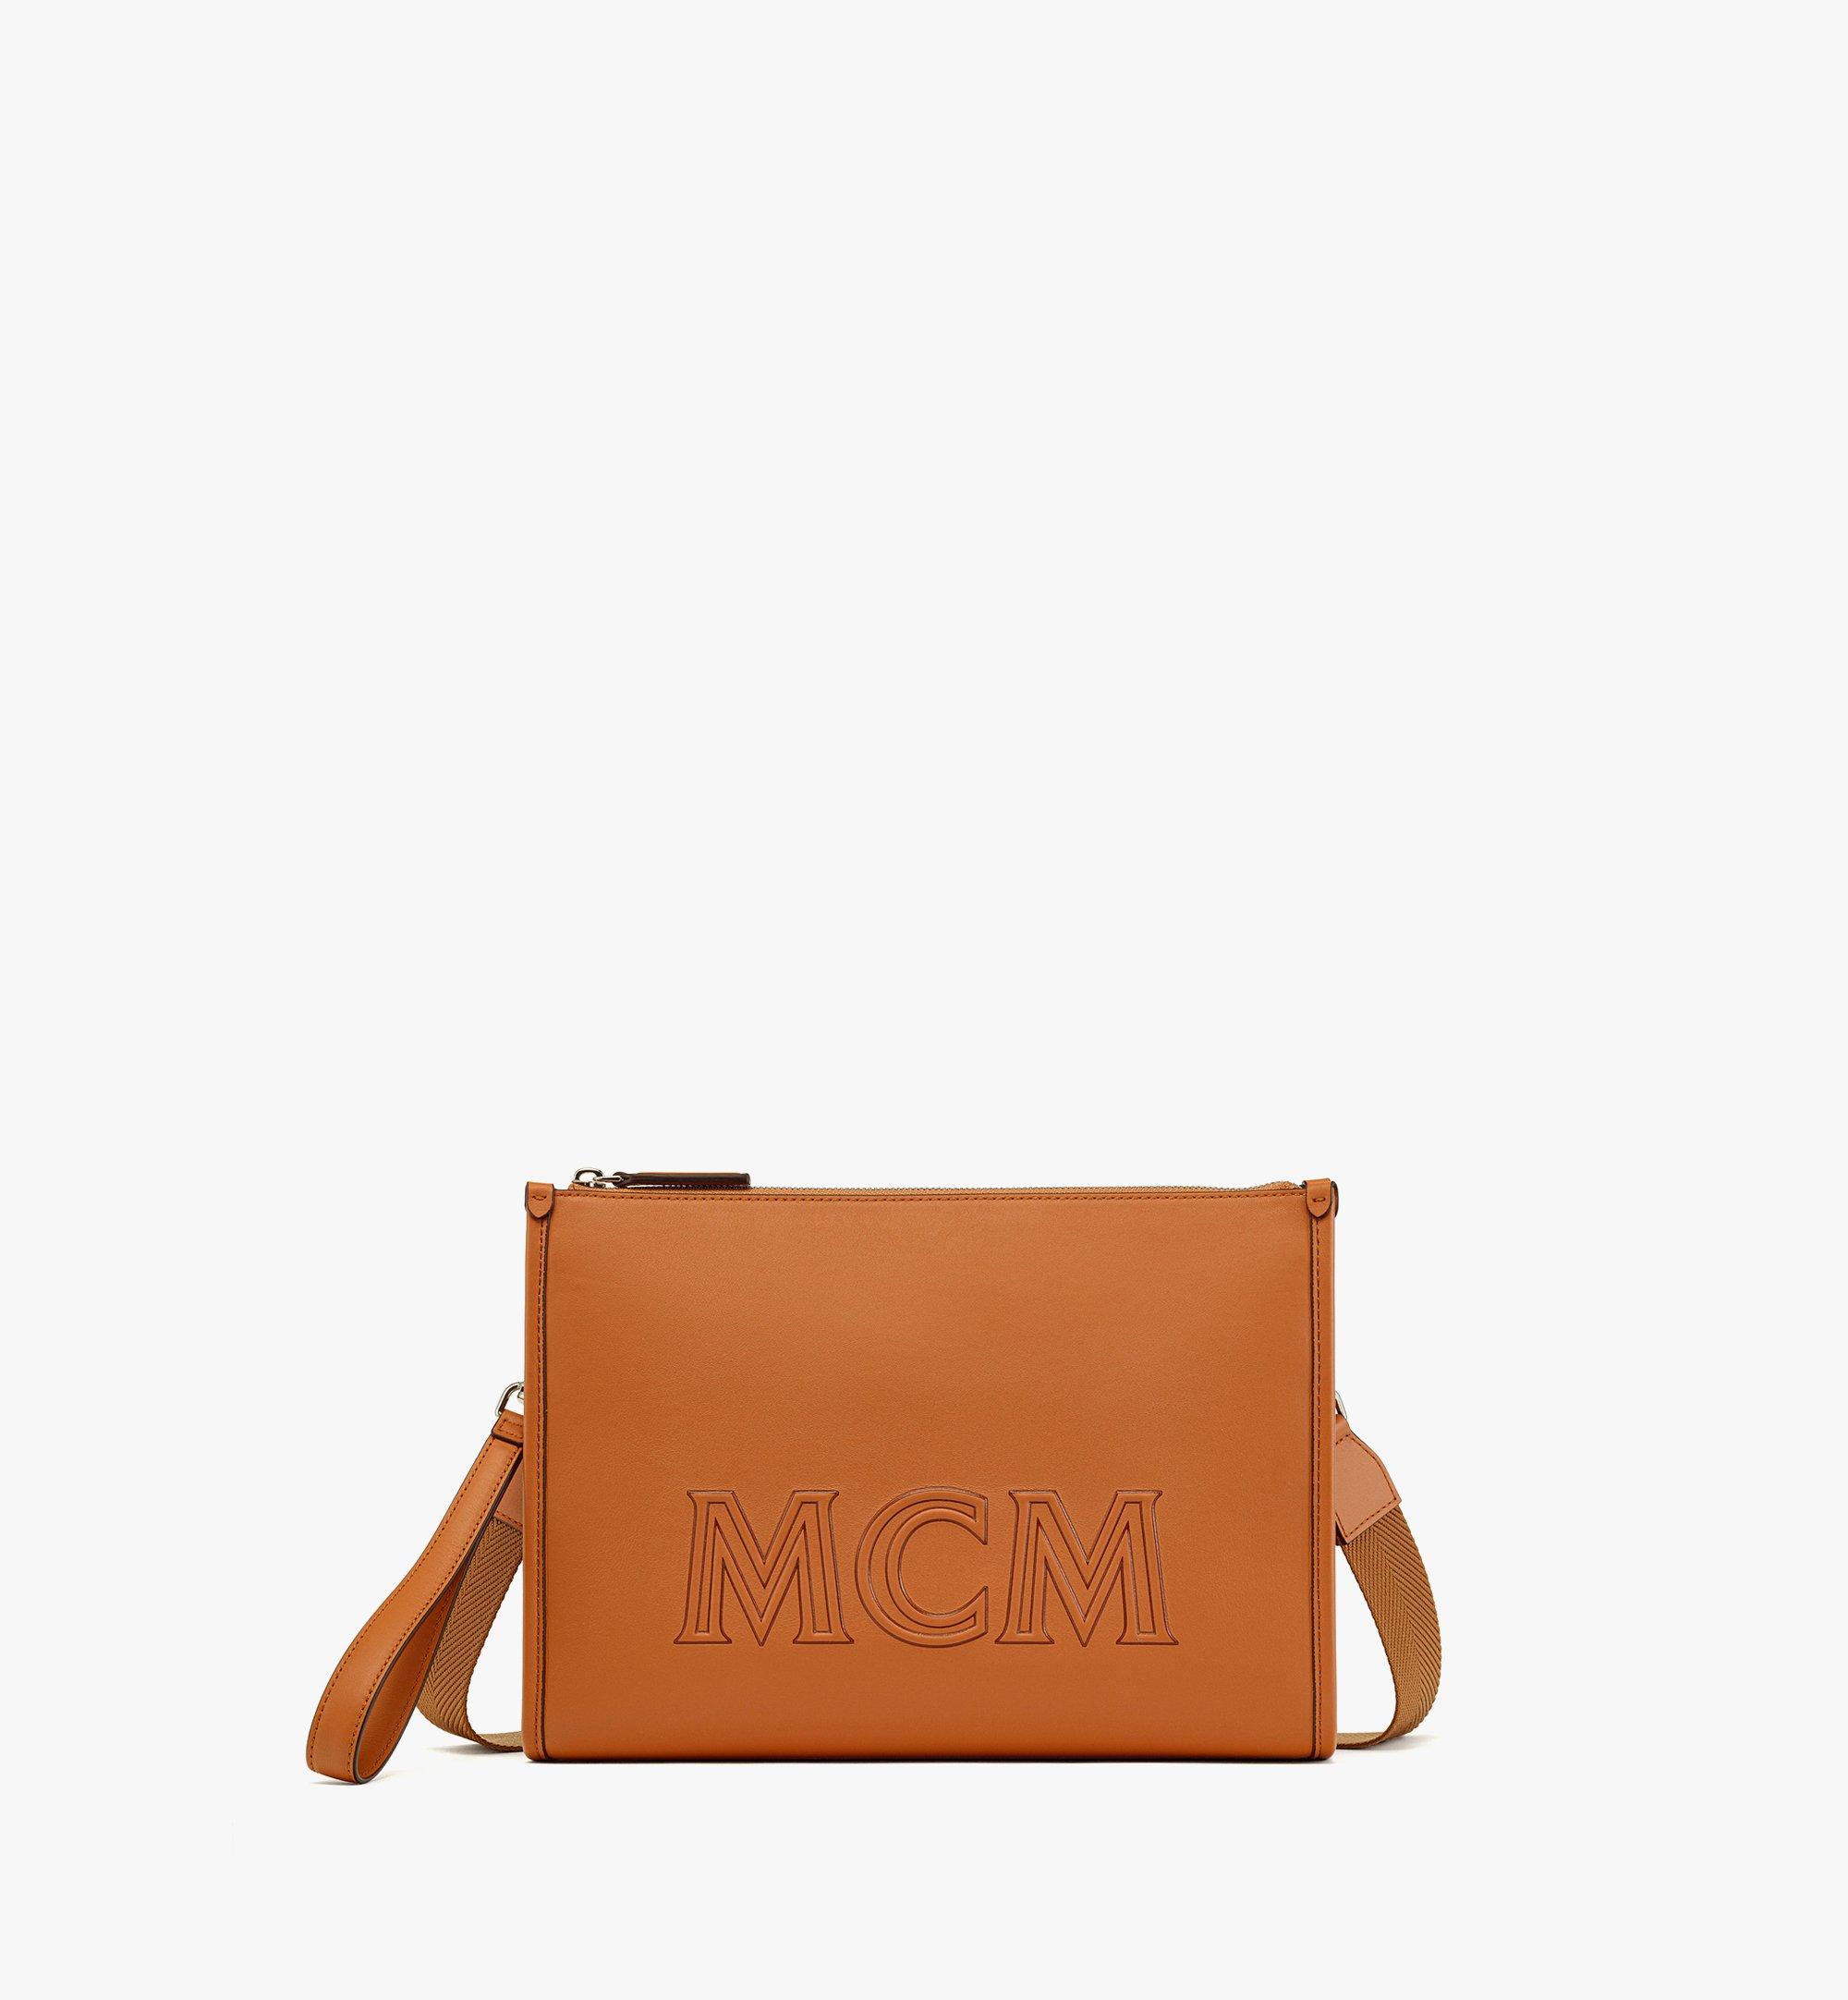 MCM Bags | MCM Official Site